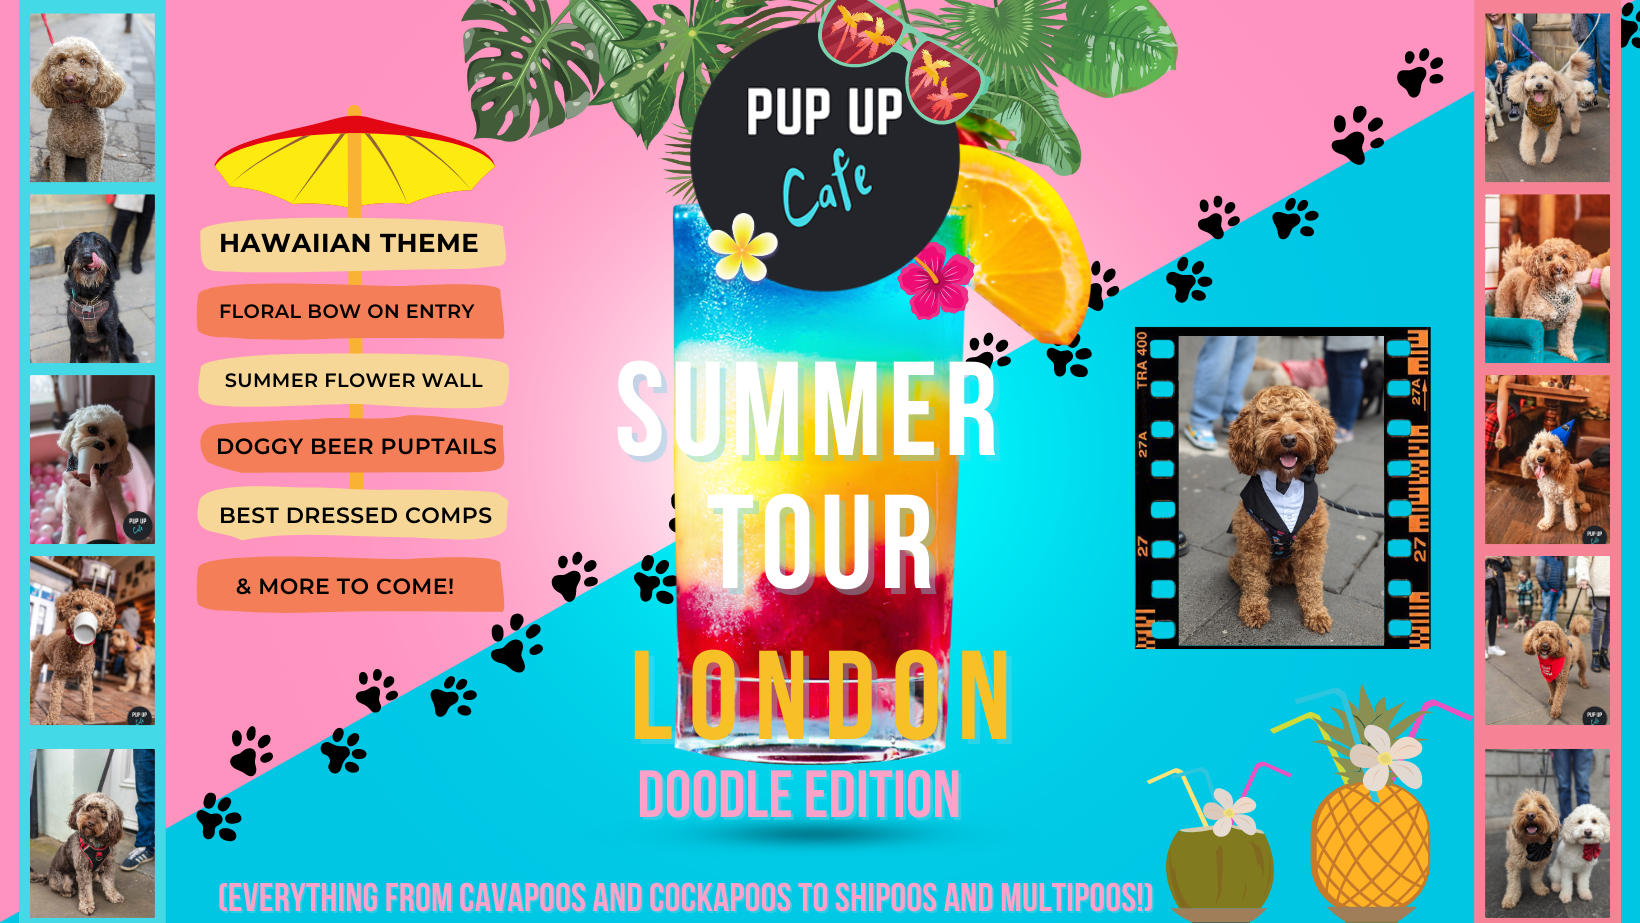 Doodle Pup Up Cafe – London | SUMMER TOUR! 🌞